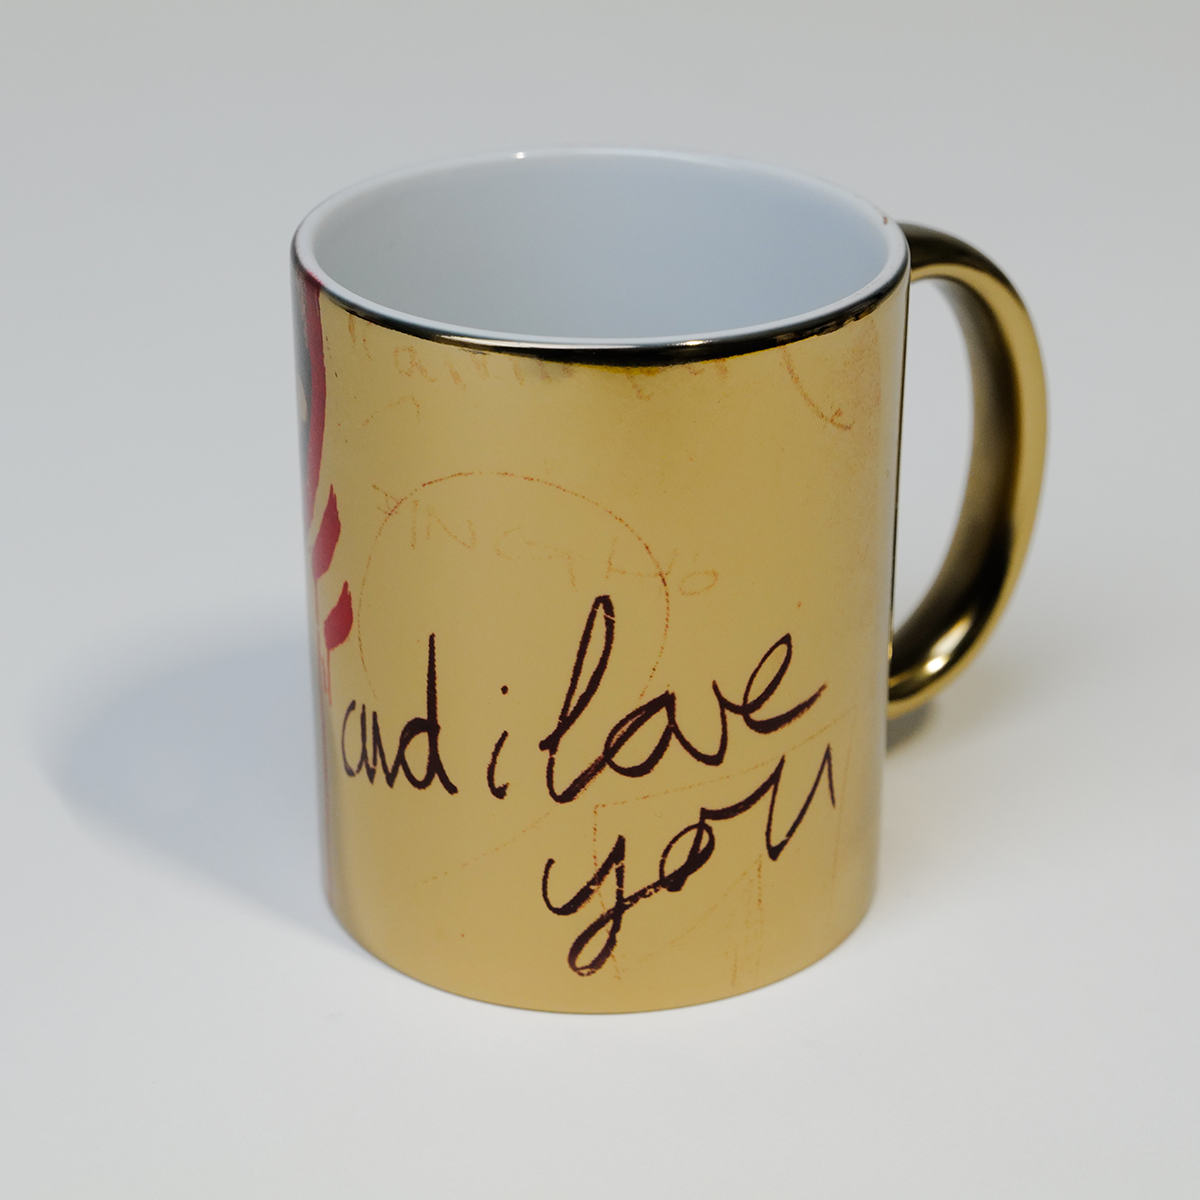 And I Love You - Gold Mug